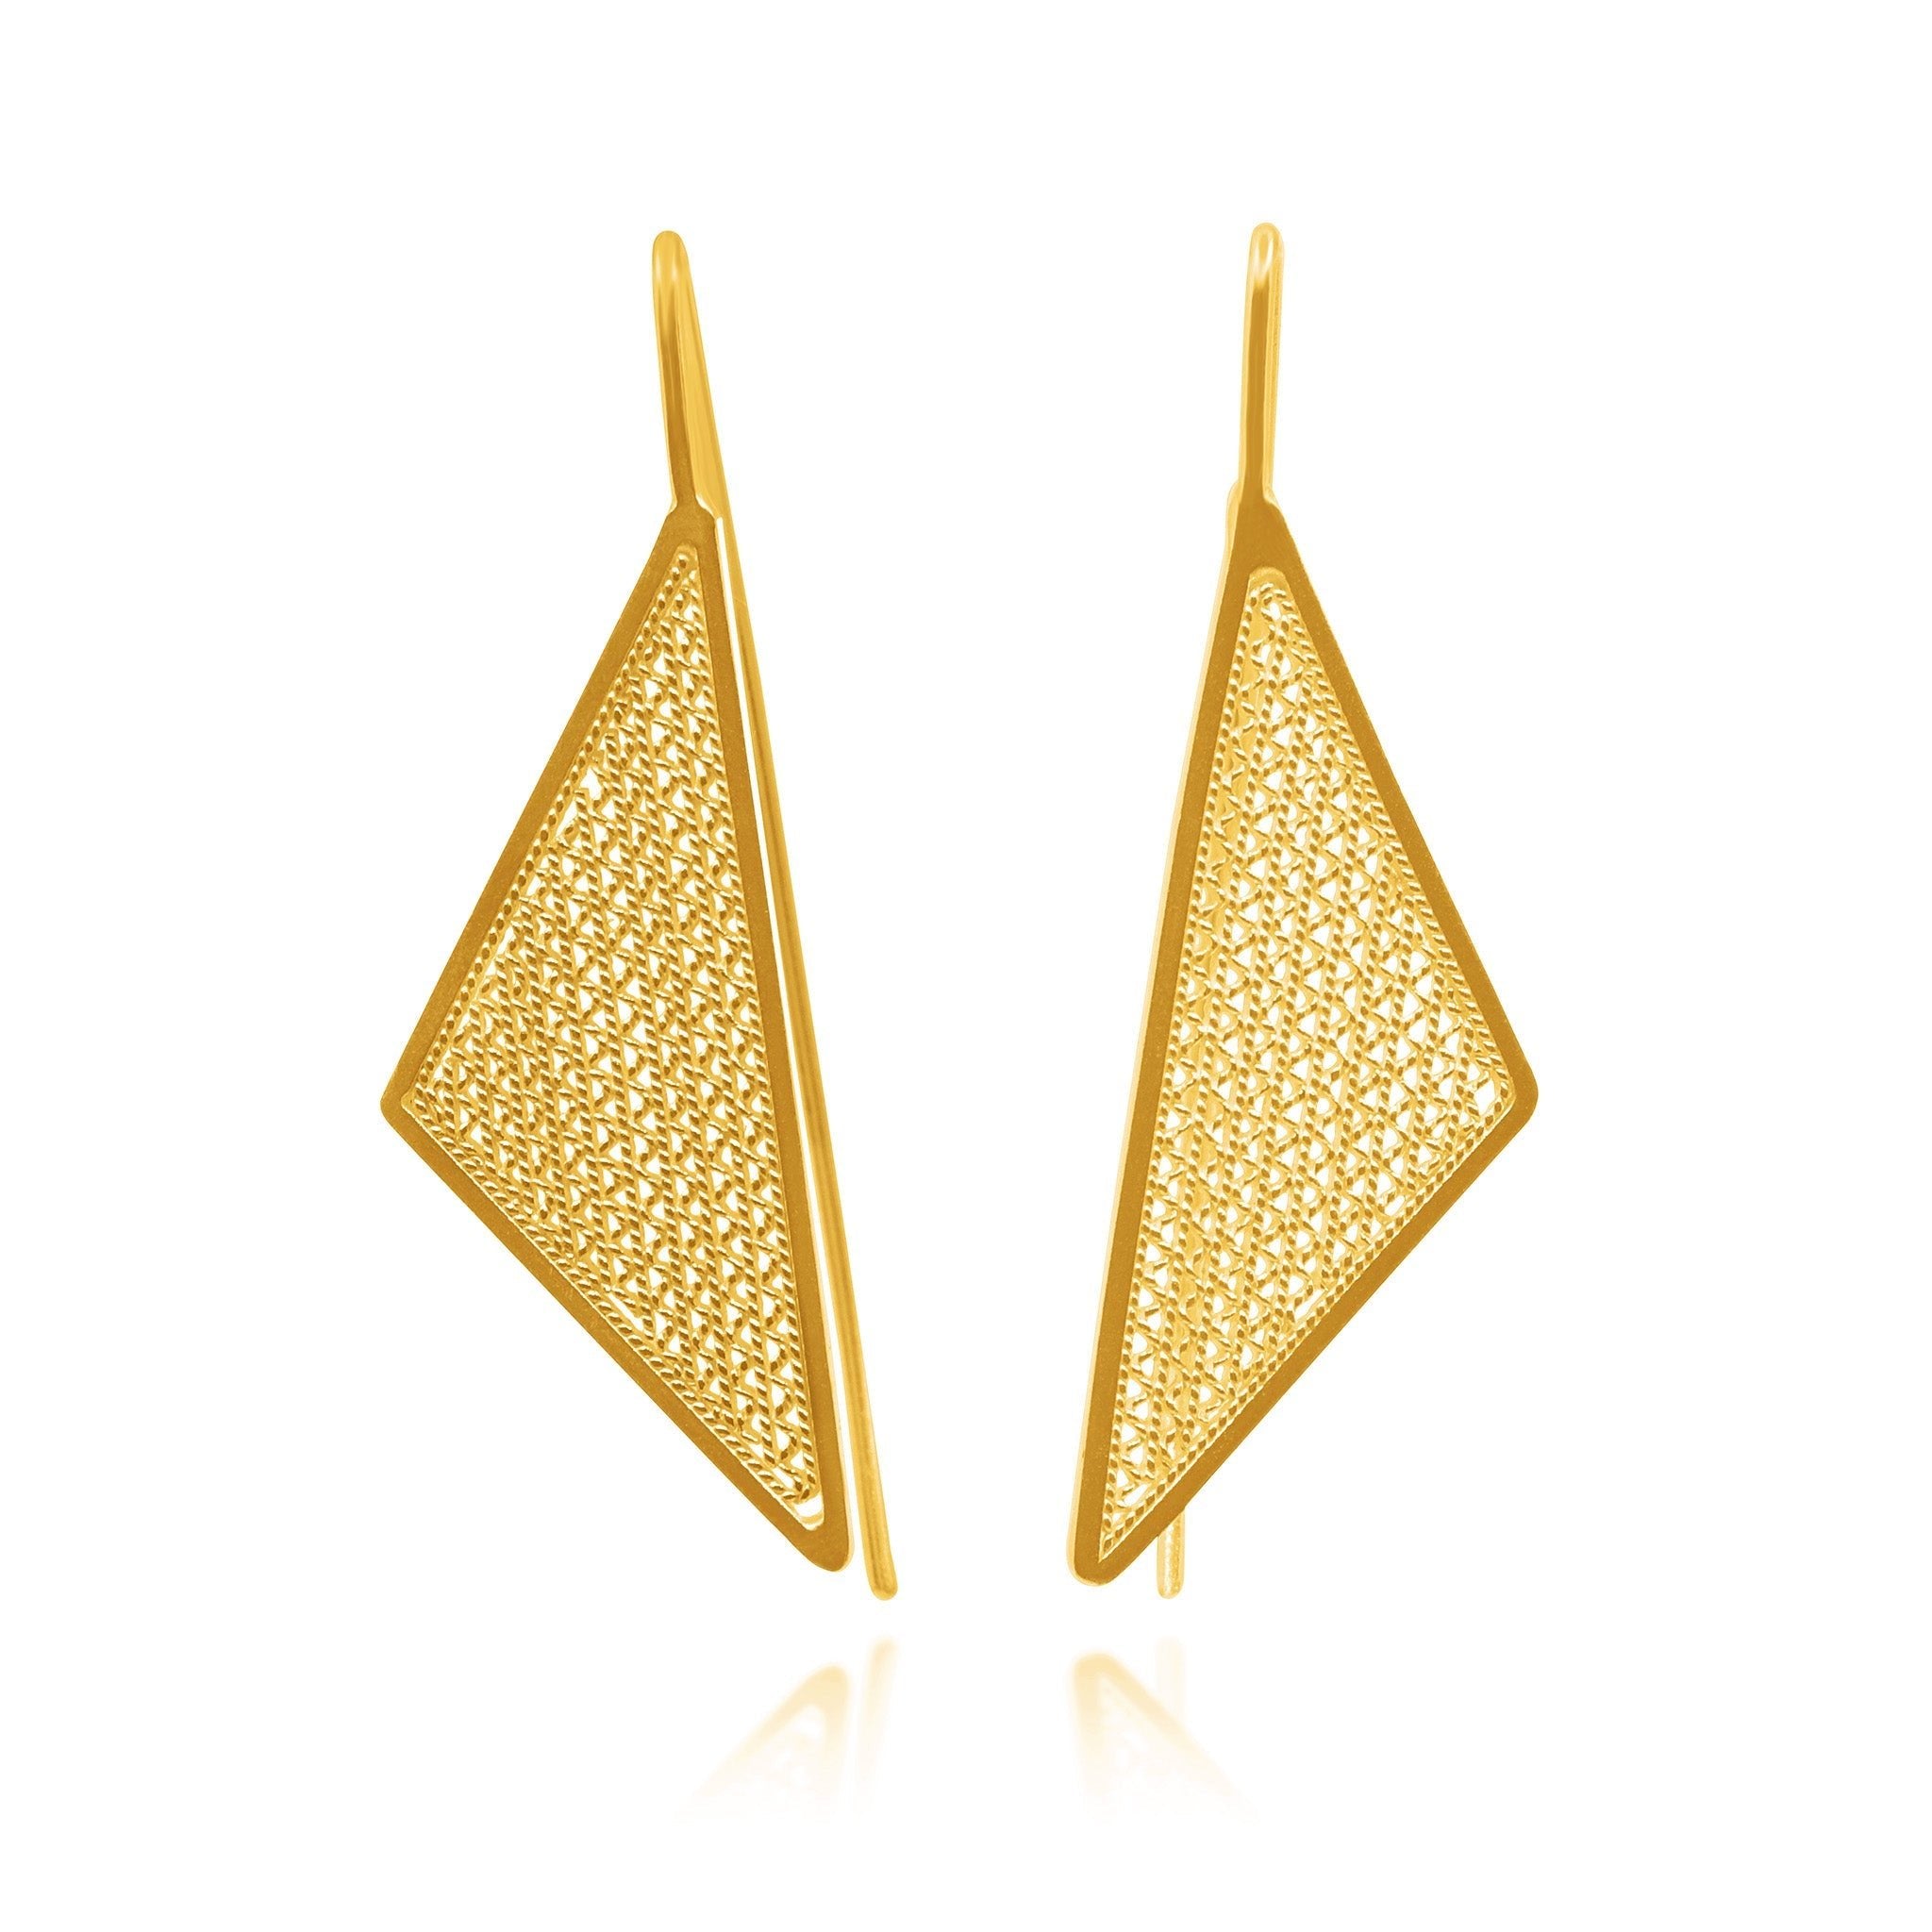 Andrea 18k Gold Plated Filigree Earrings - Earrings